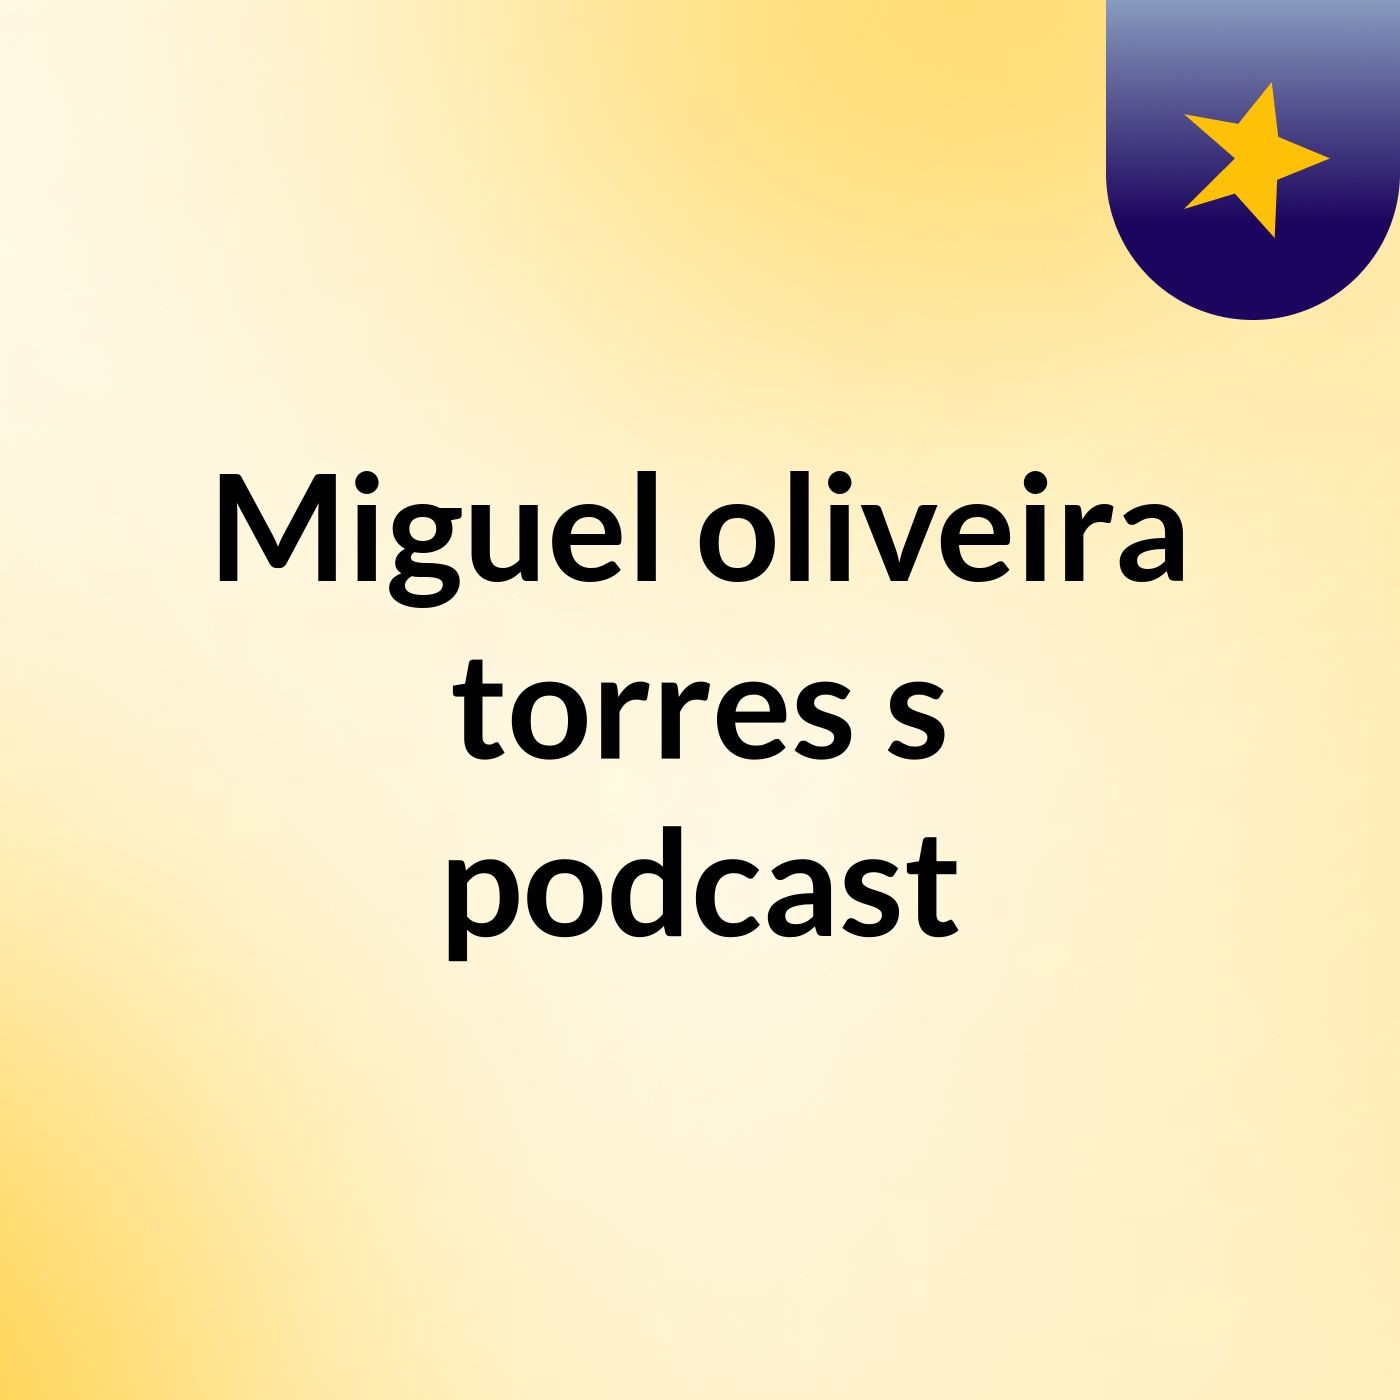 Miguel oliveira torres's podcast